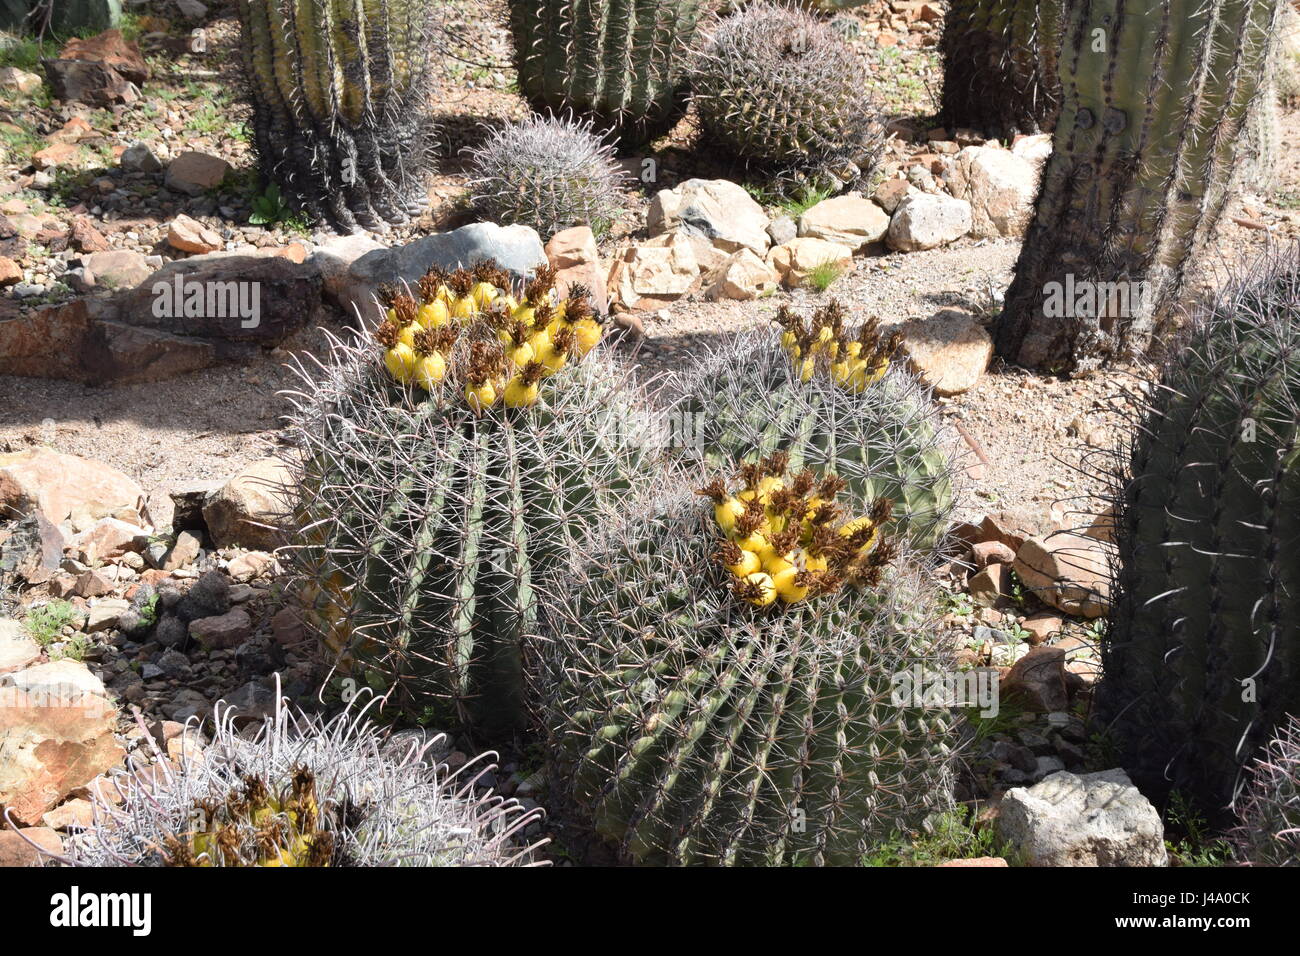 medium-sized cactus with yellow flowers Stock Photo